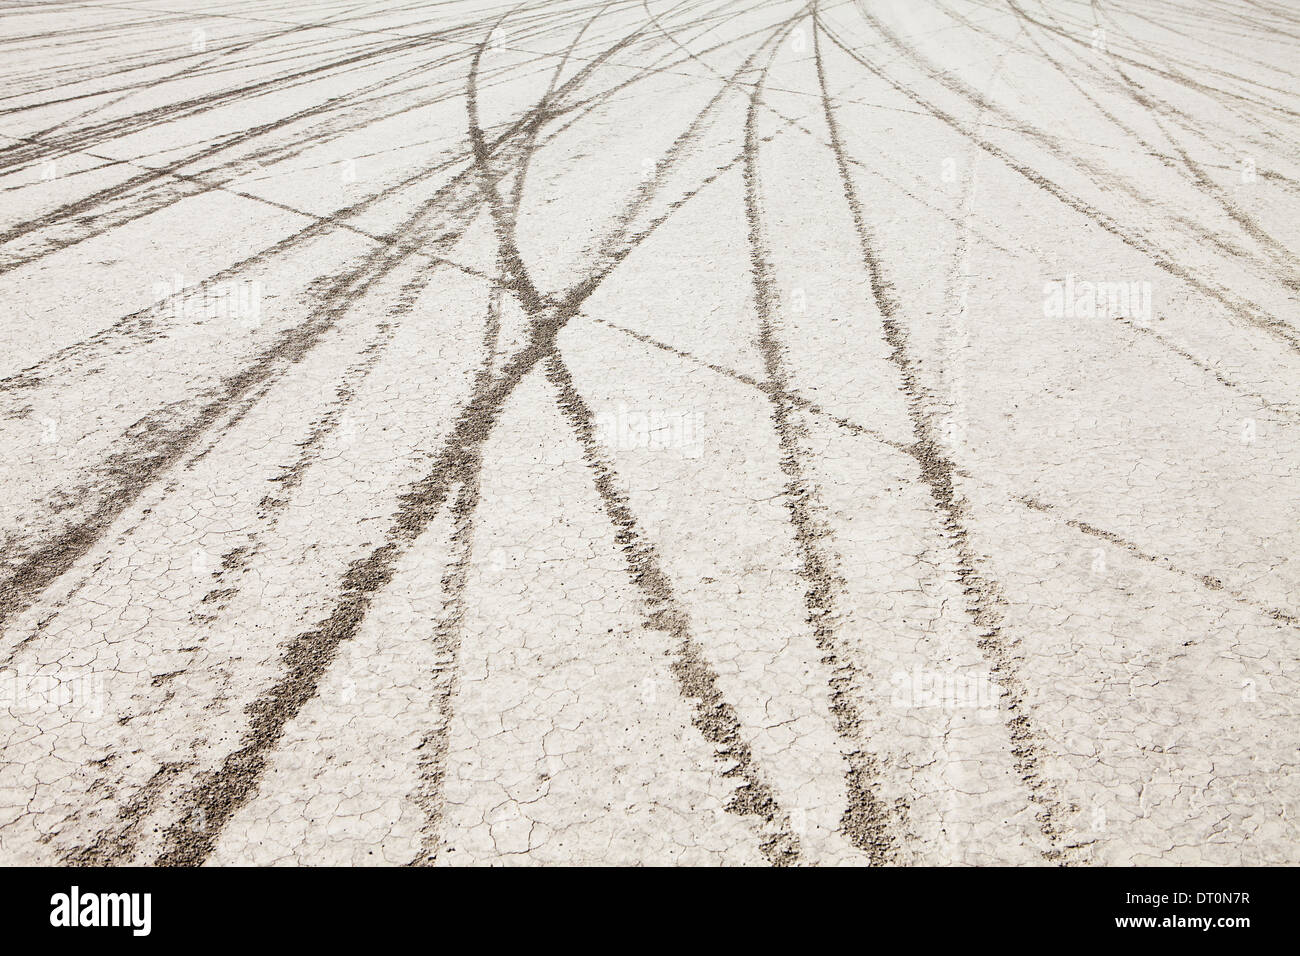 Black Rock Desert Nevada USA Tyre marks tracks in the playa salt pan surface Stock Photo